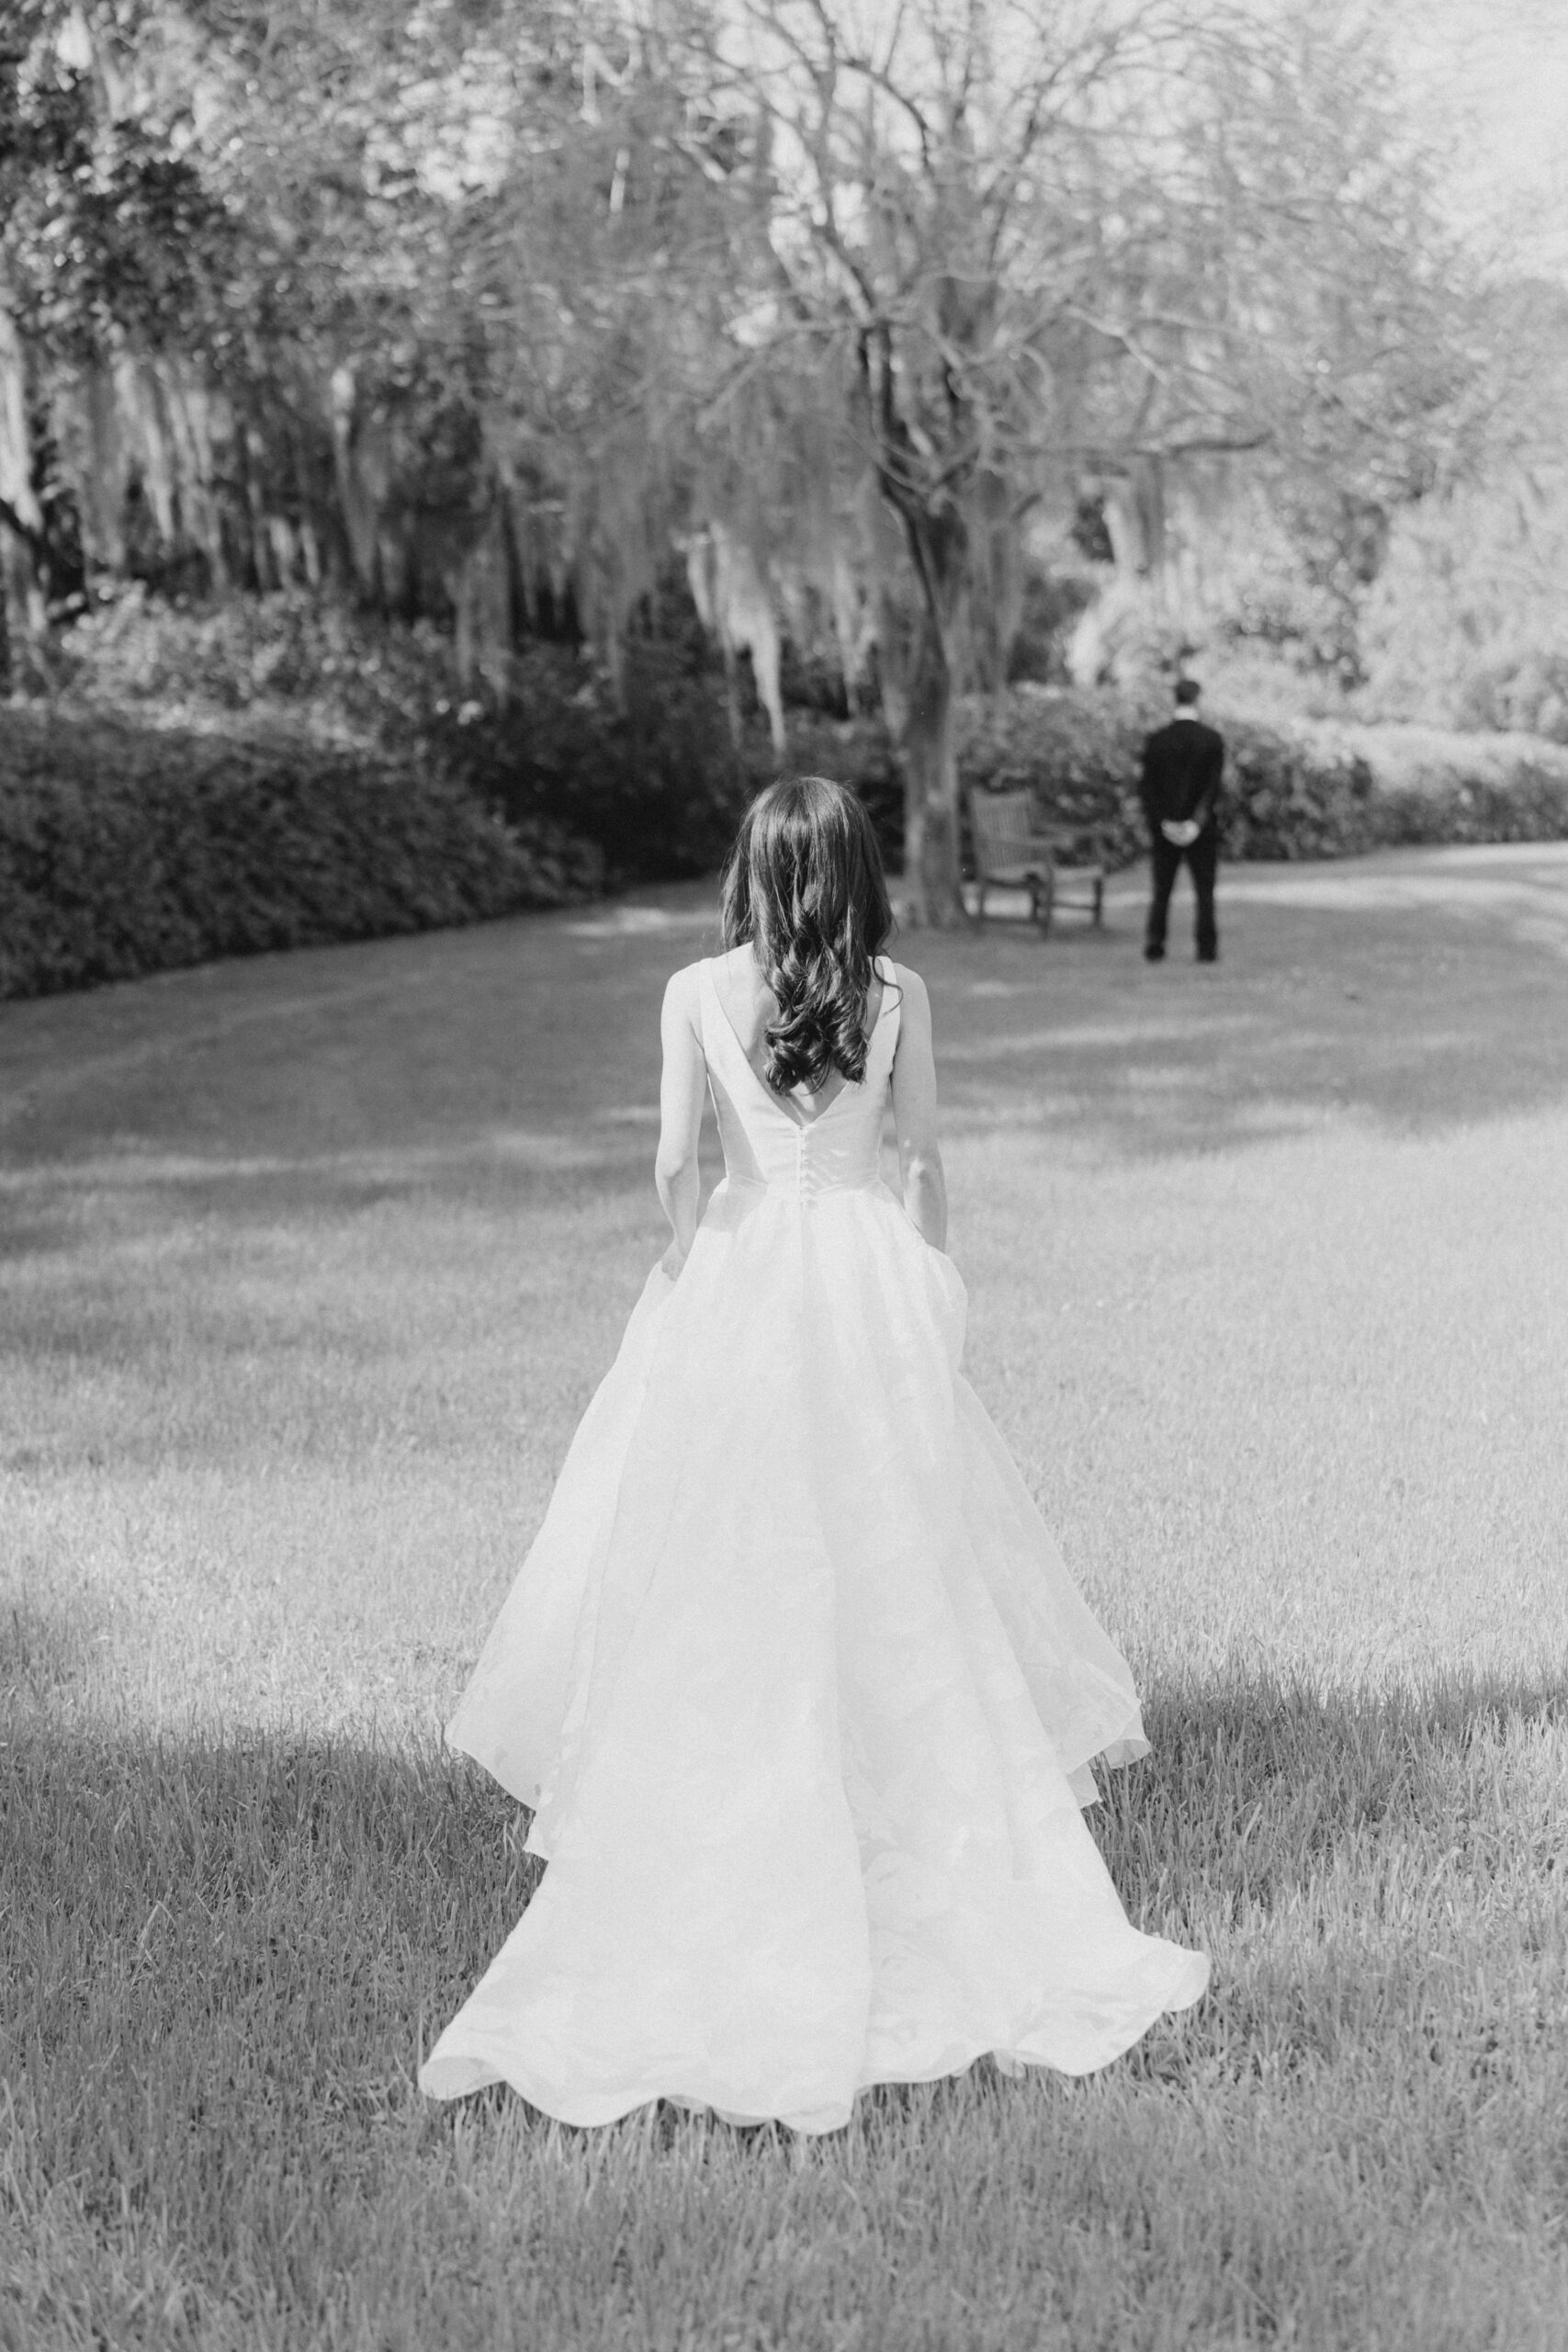 Bride walks up to groom in the garden during first look. 